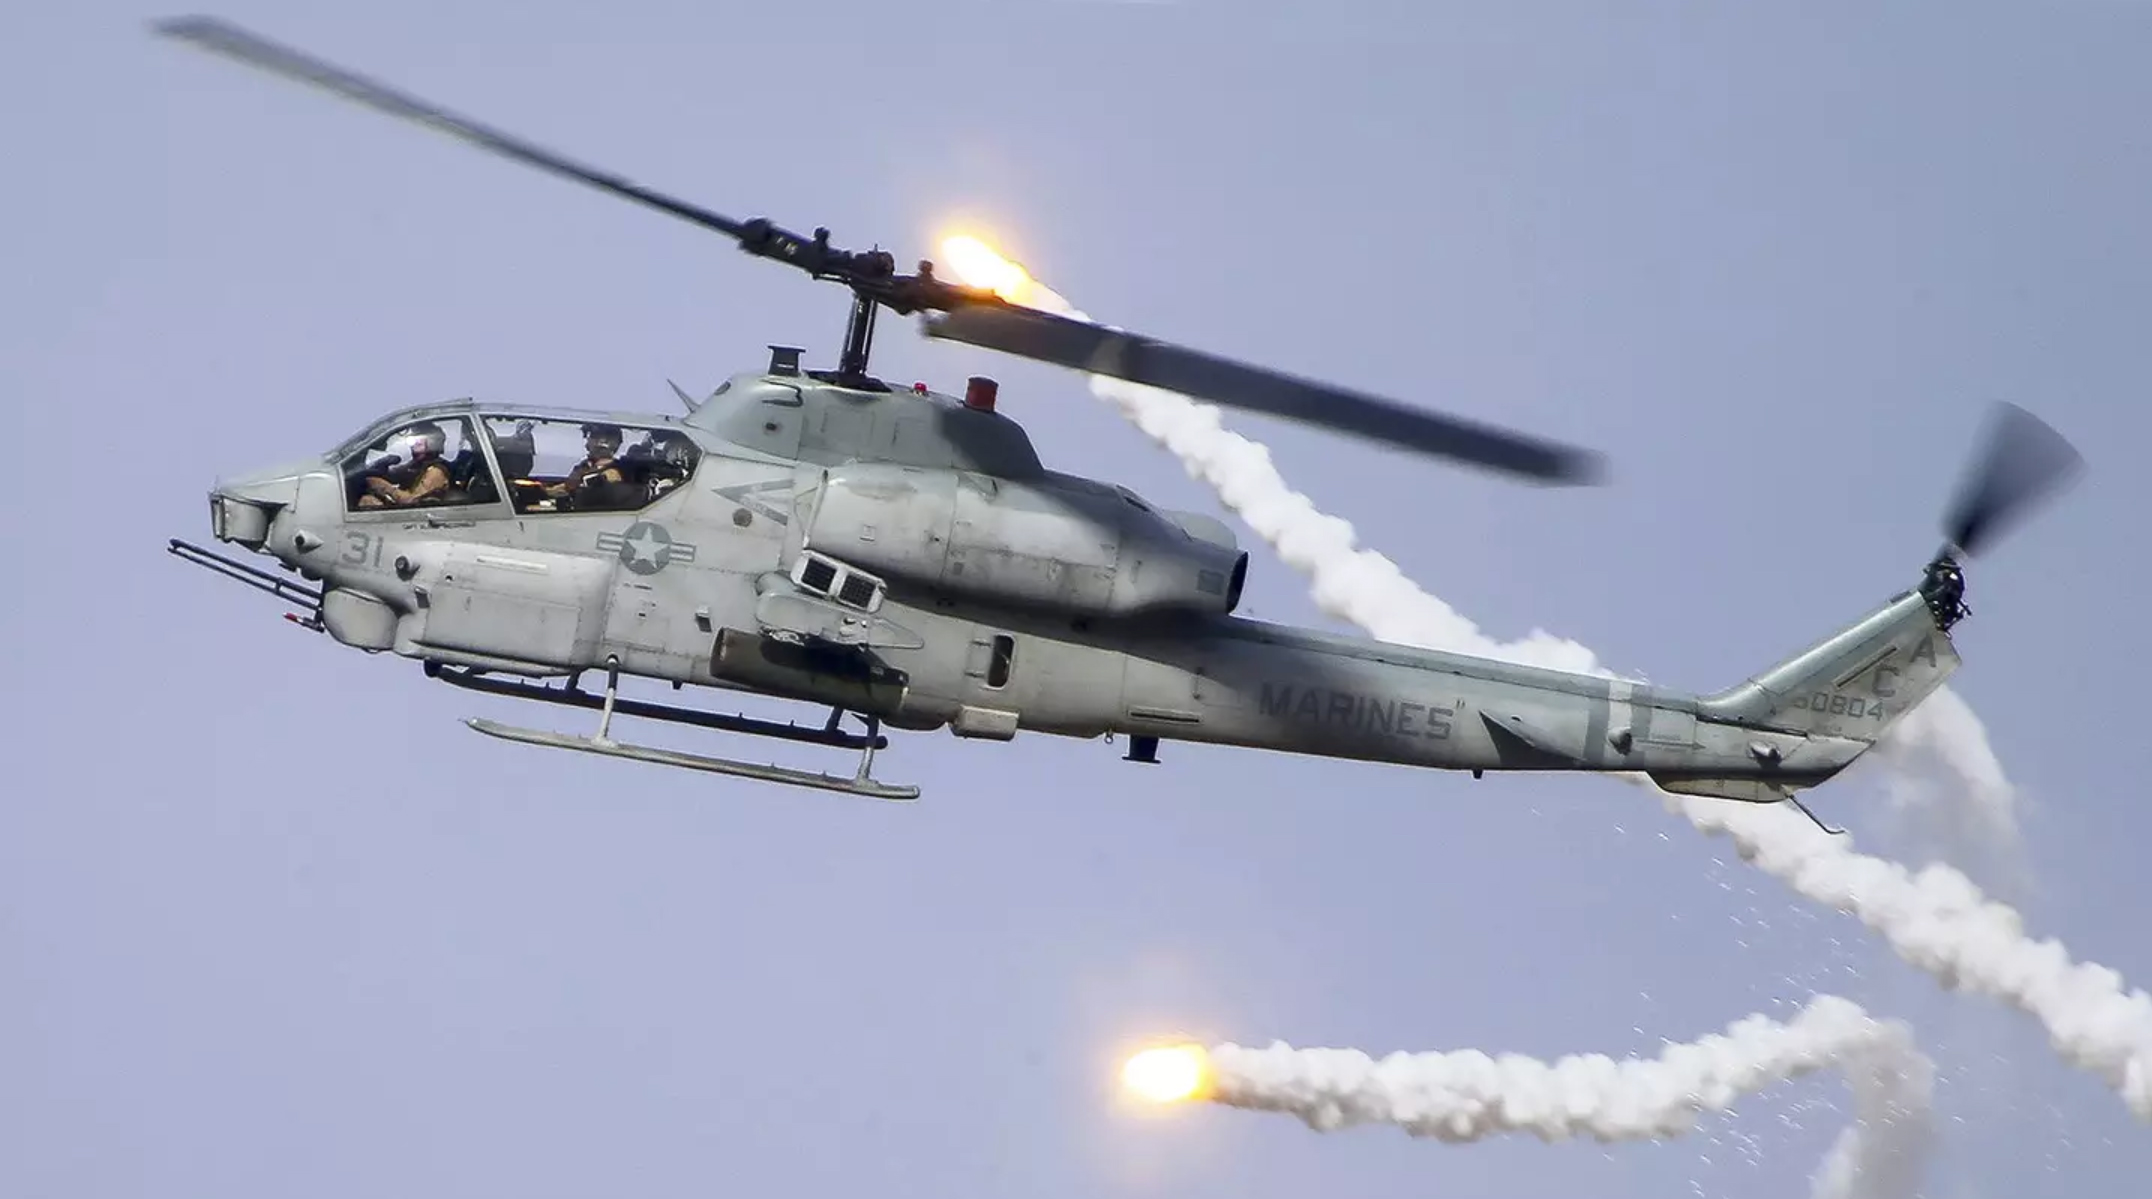 Супер кобра. Вертолет Ah-1w "супер Кобра". Вертолет Ah-1. Ah 1z super Cobra. Bell Ah-1 super Cobra.